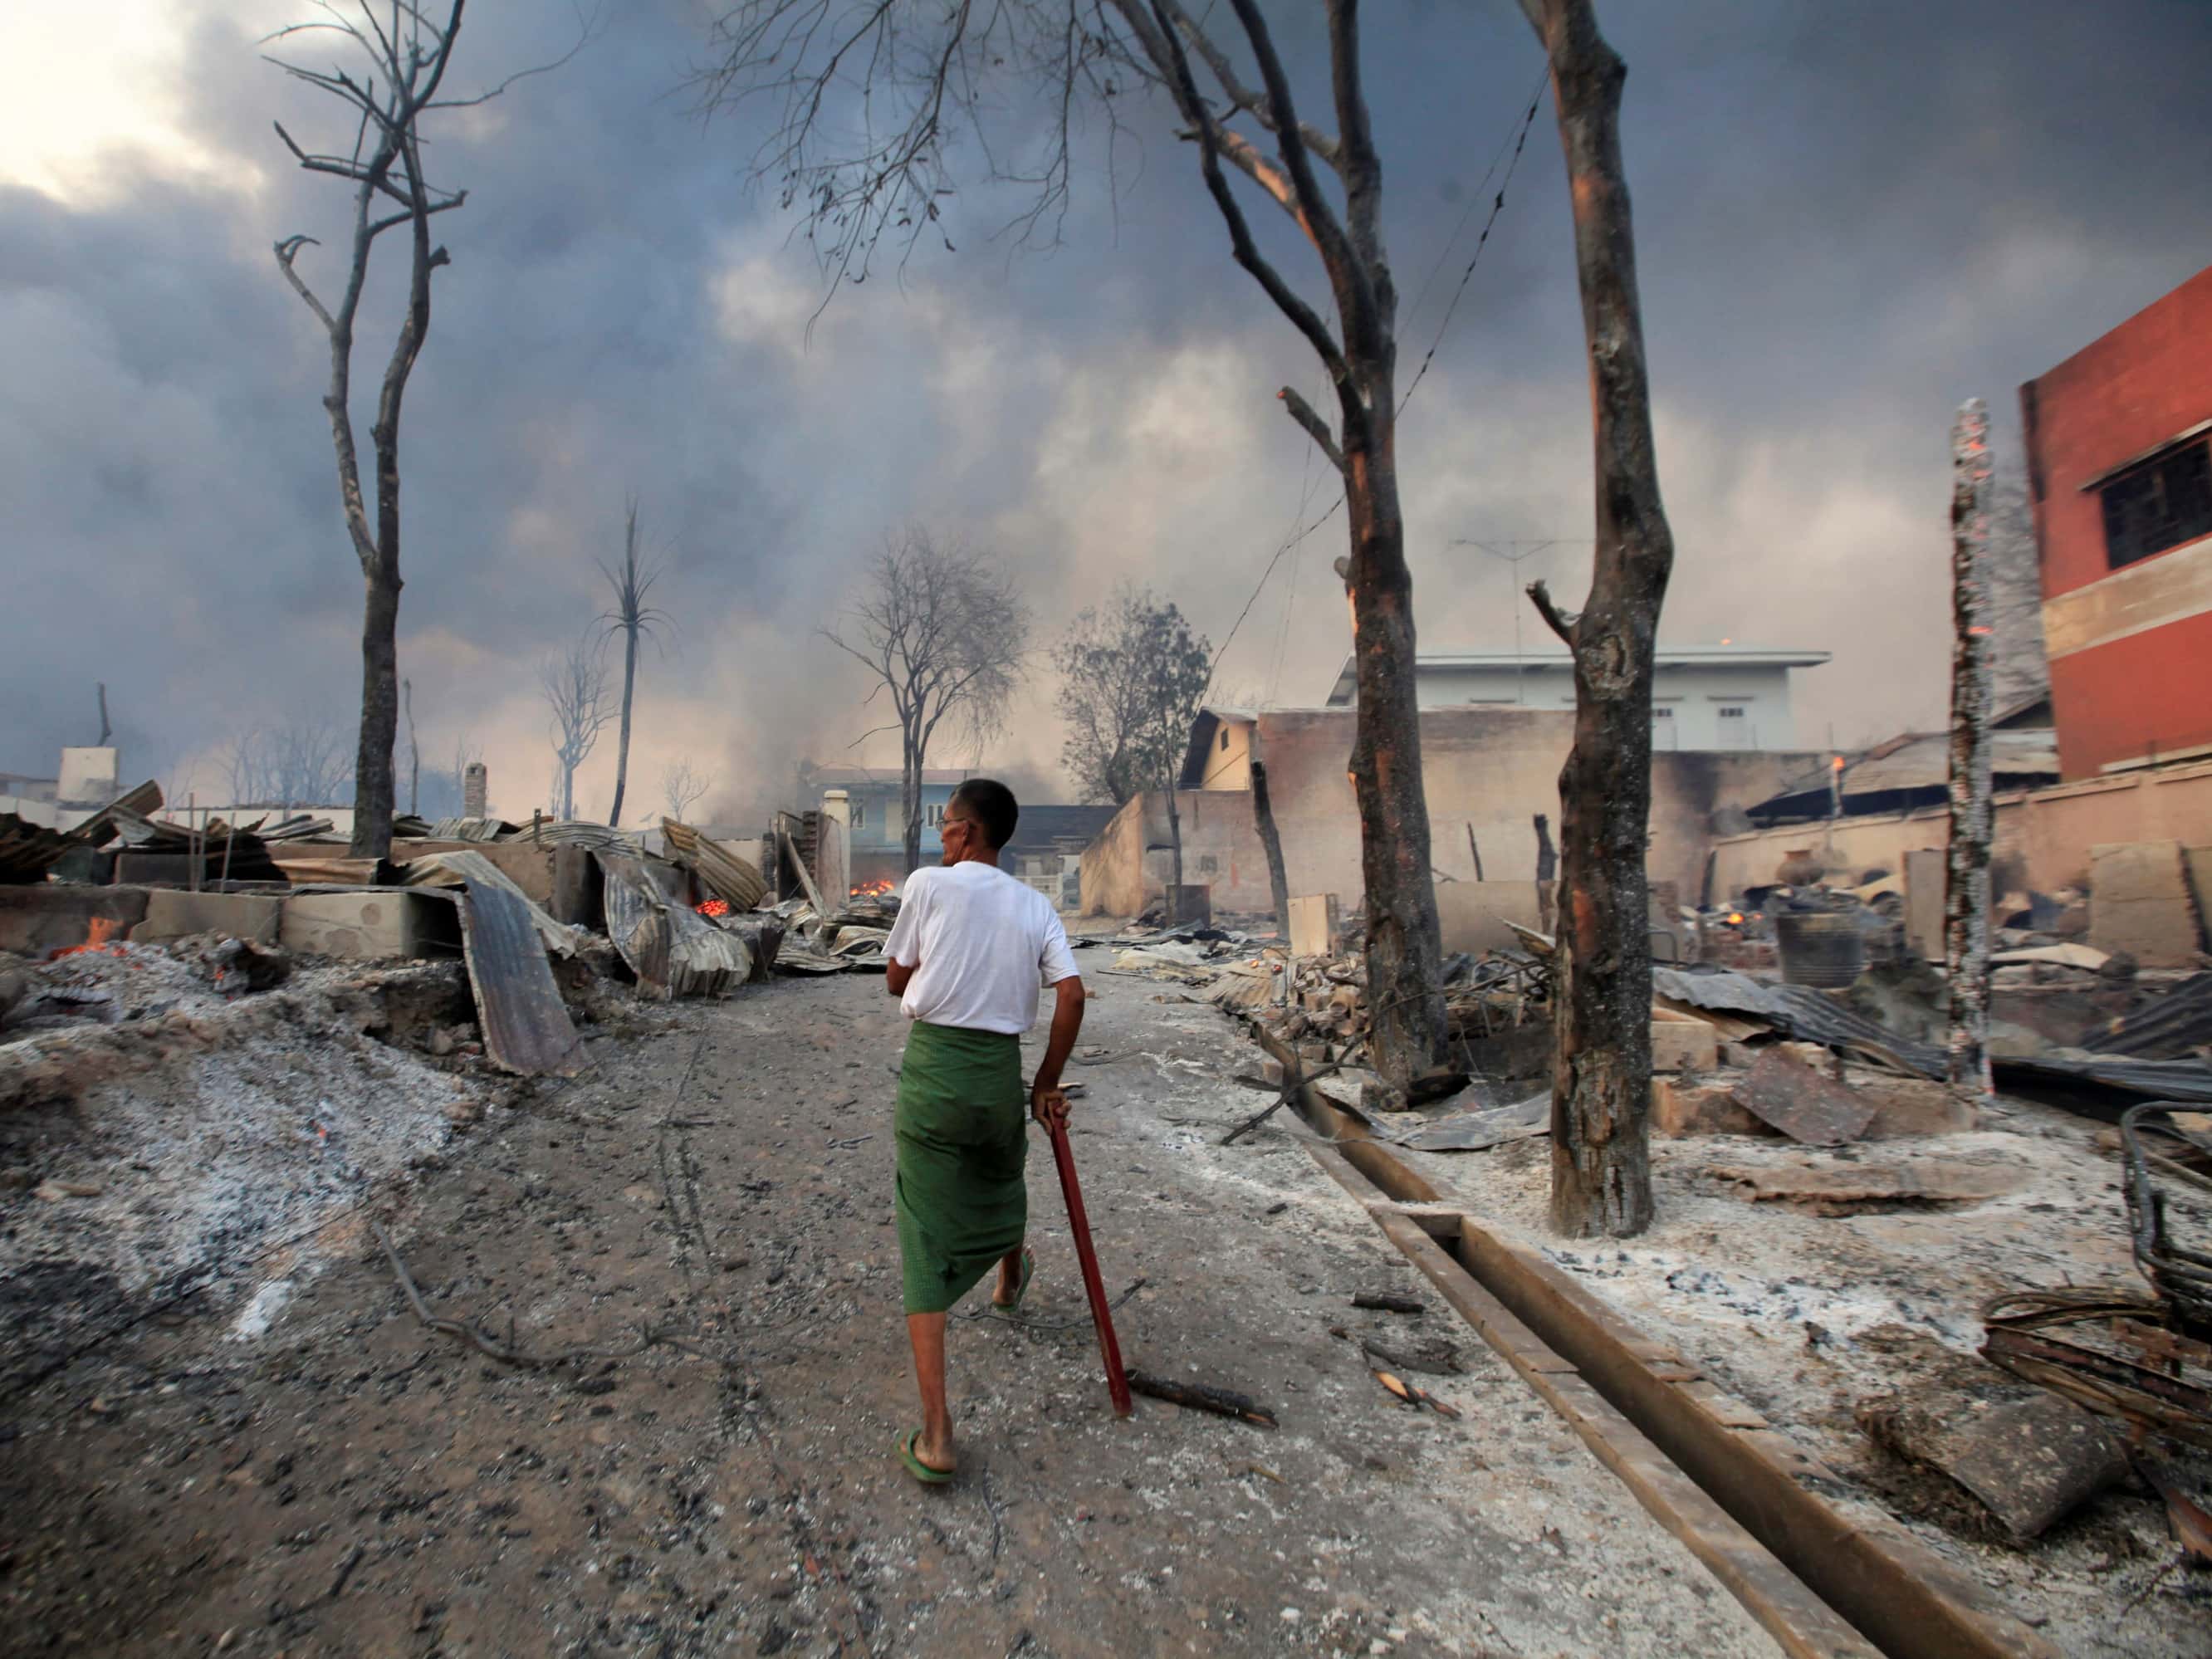 A man walks through a burned-out area of Meikhtila on 21 March 2013, REUTERS/Soe Zeya Tun